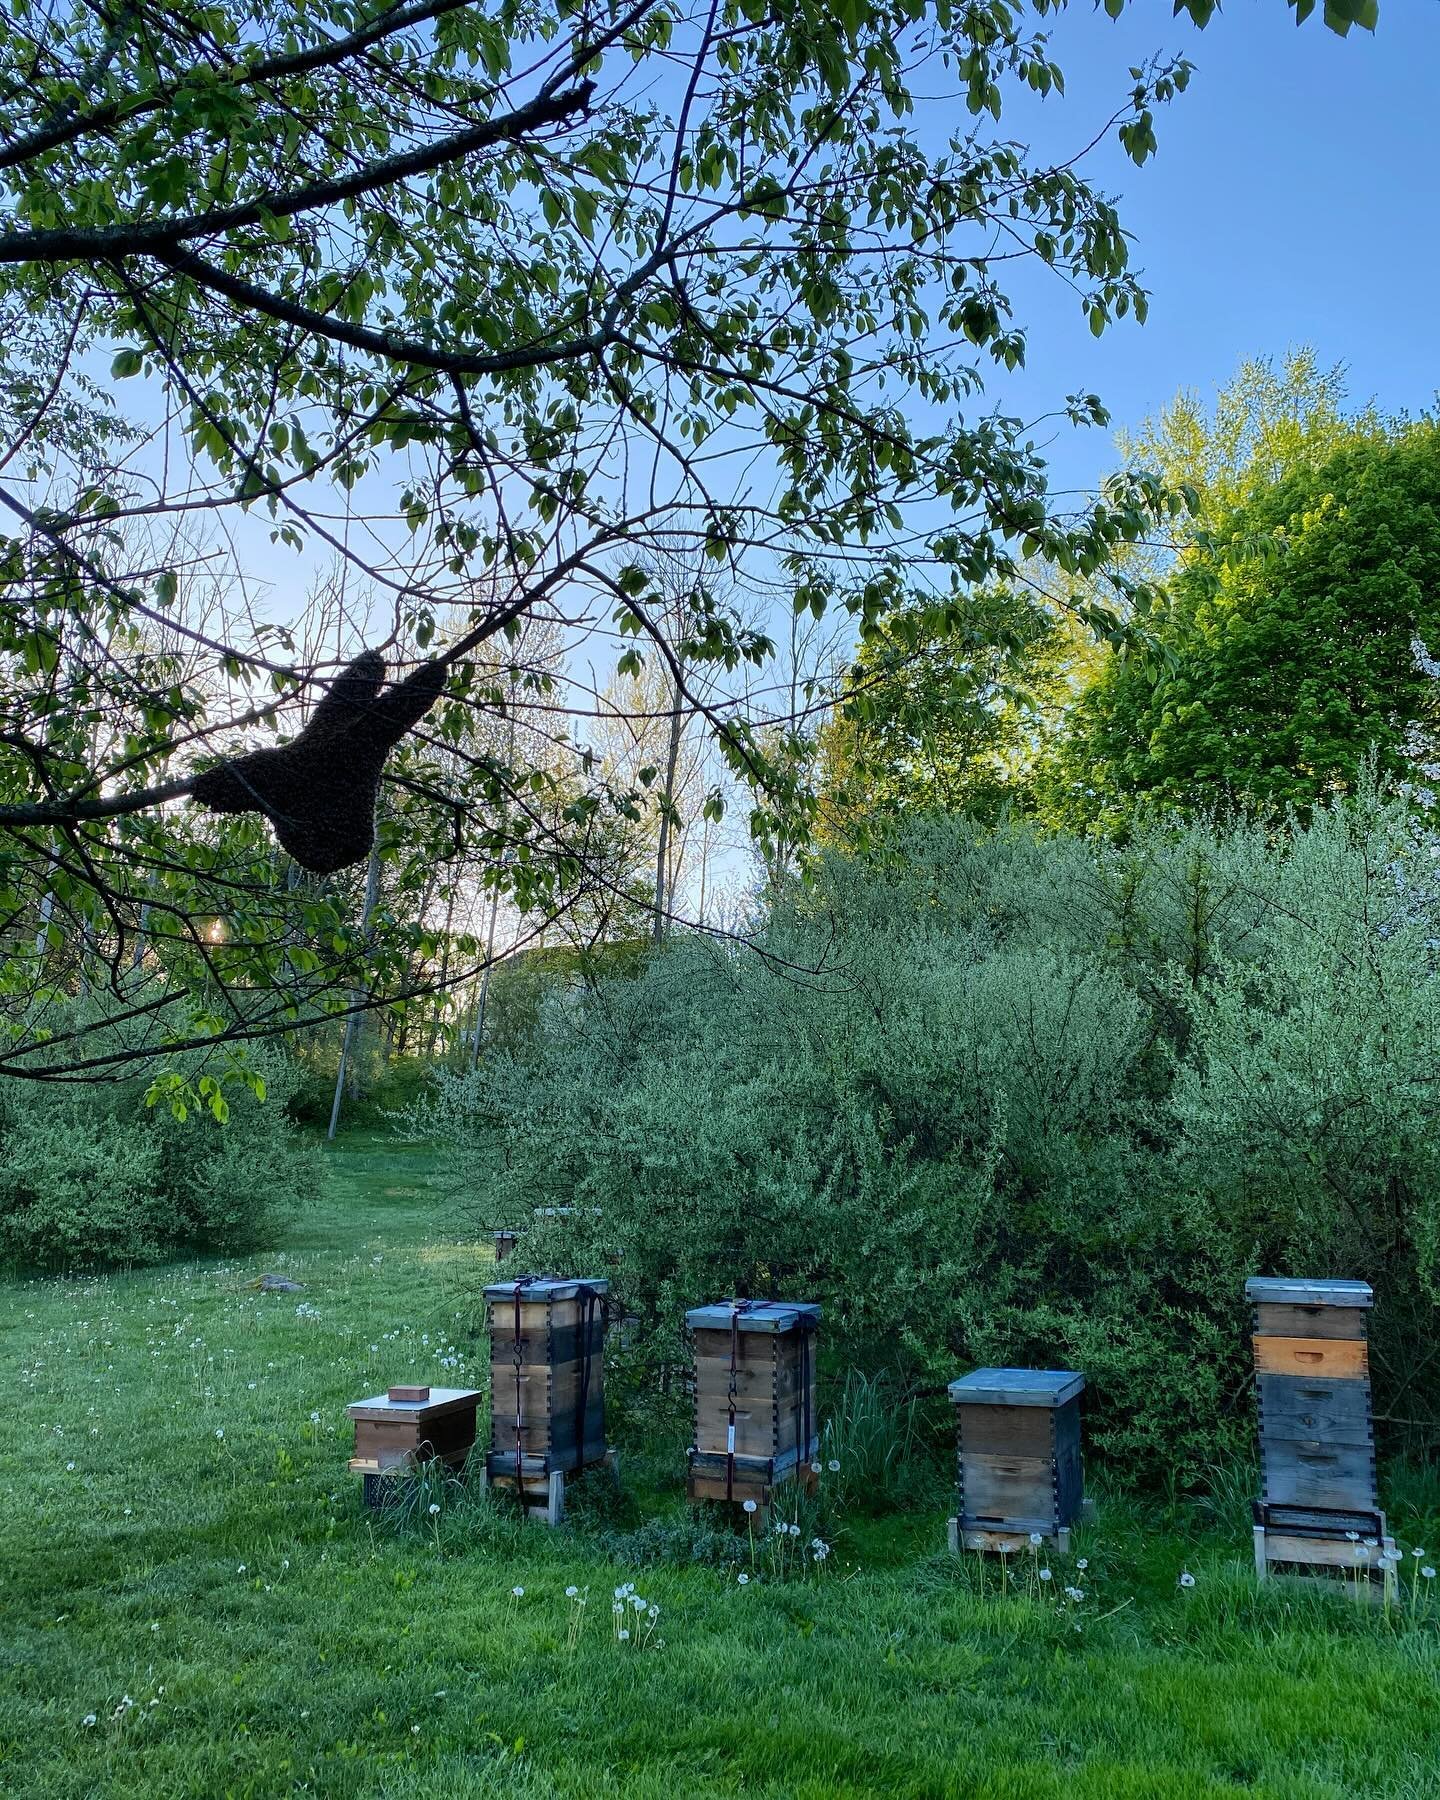 Another day, another swarm. 😝

#springtime #may #swarmseason #farmlife #sixdutchessfarm #honeybees #naturalbeekeeping #hudsonvalleyliving